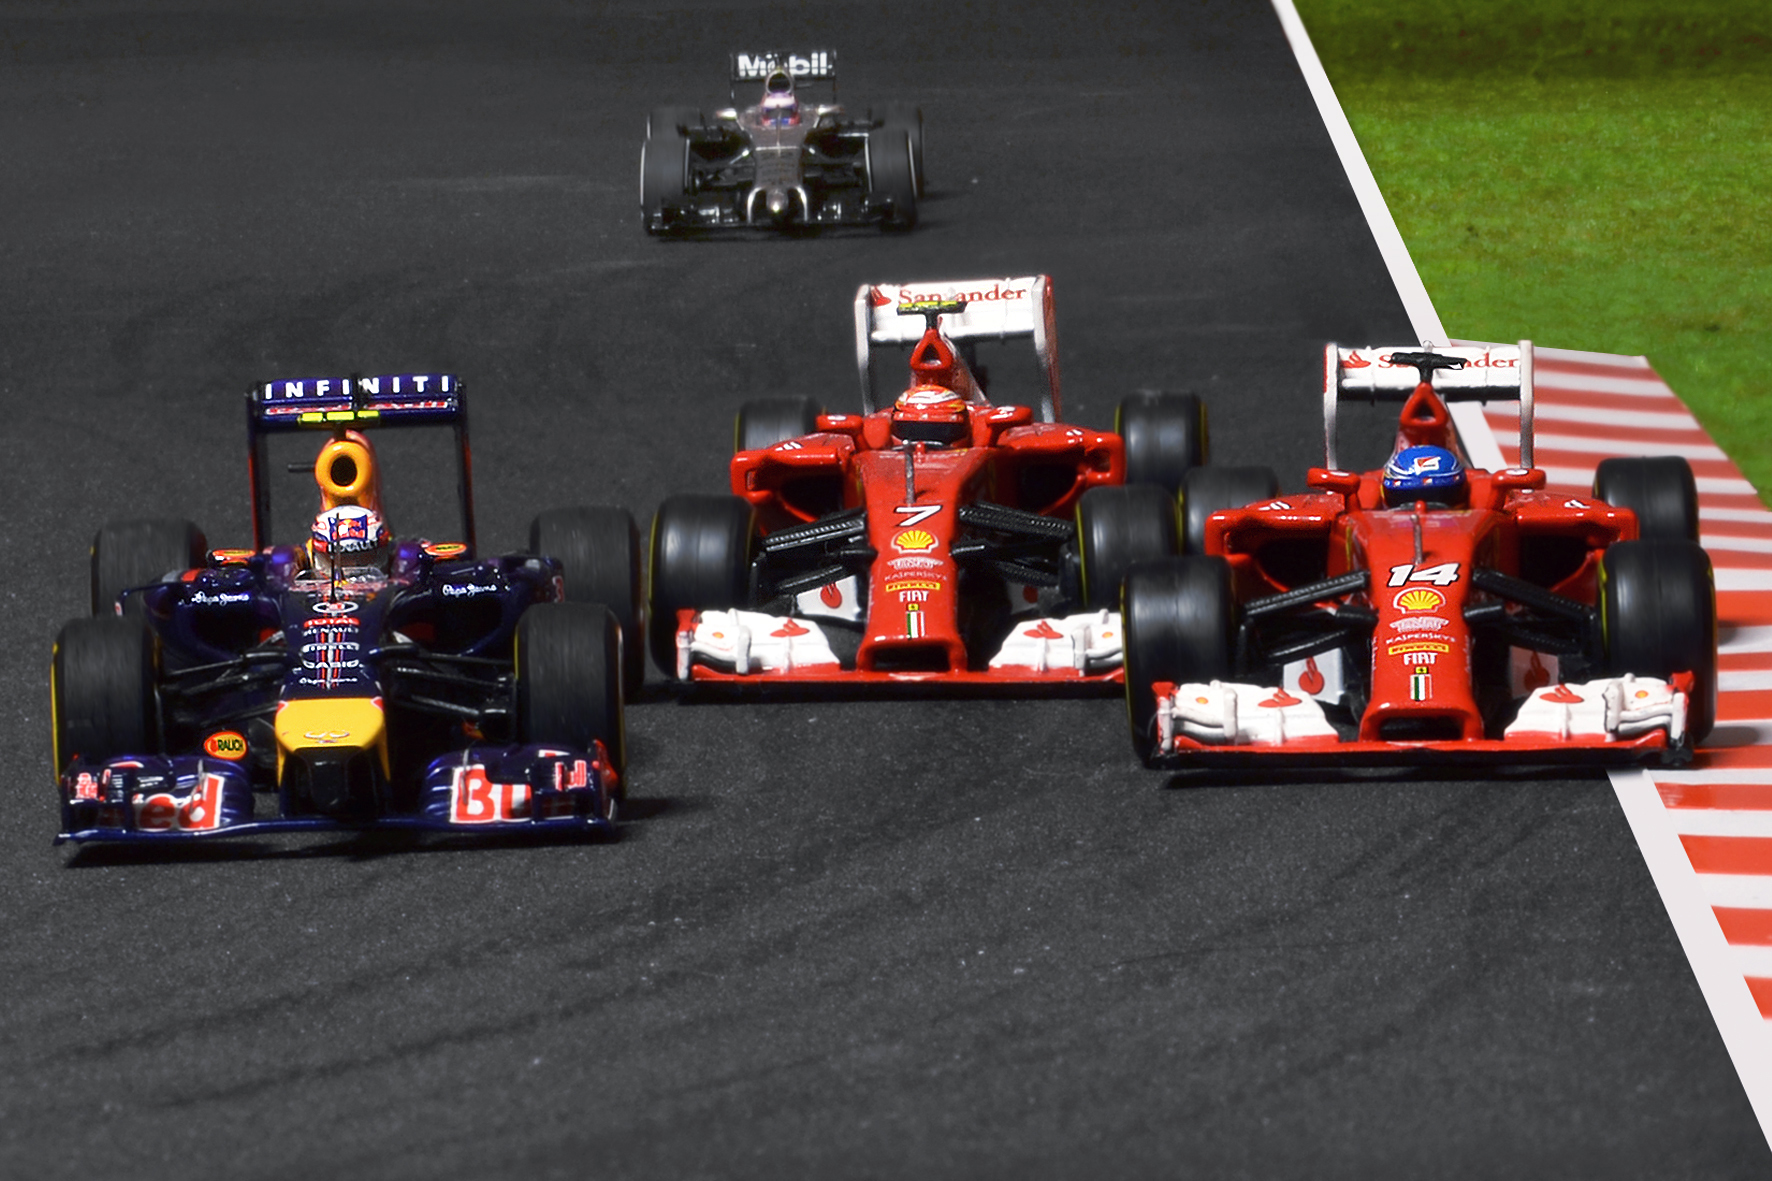 Red Bull RB10 Daniel Ricciardo & Ferrari F14-T Kimi Räikkönen & Fernando Alonso & McLaren MP4-29<br />Jenson Button 2014 - Spark & Hot Wheels & Minichamps 1:43